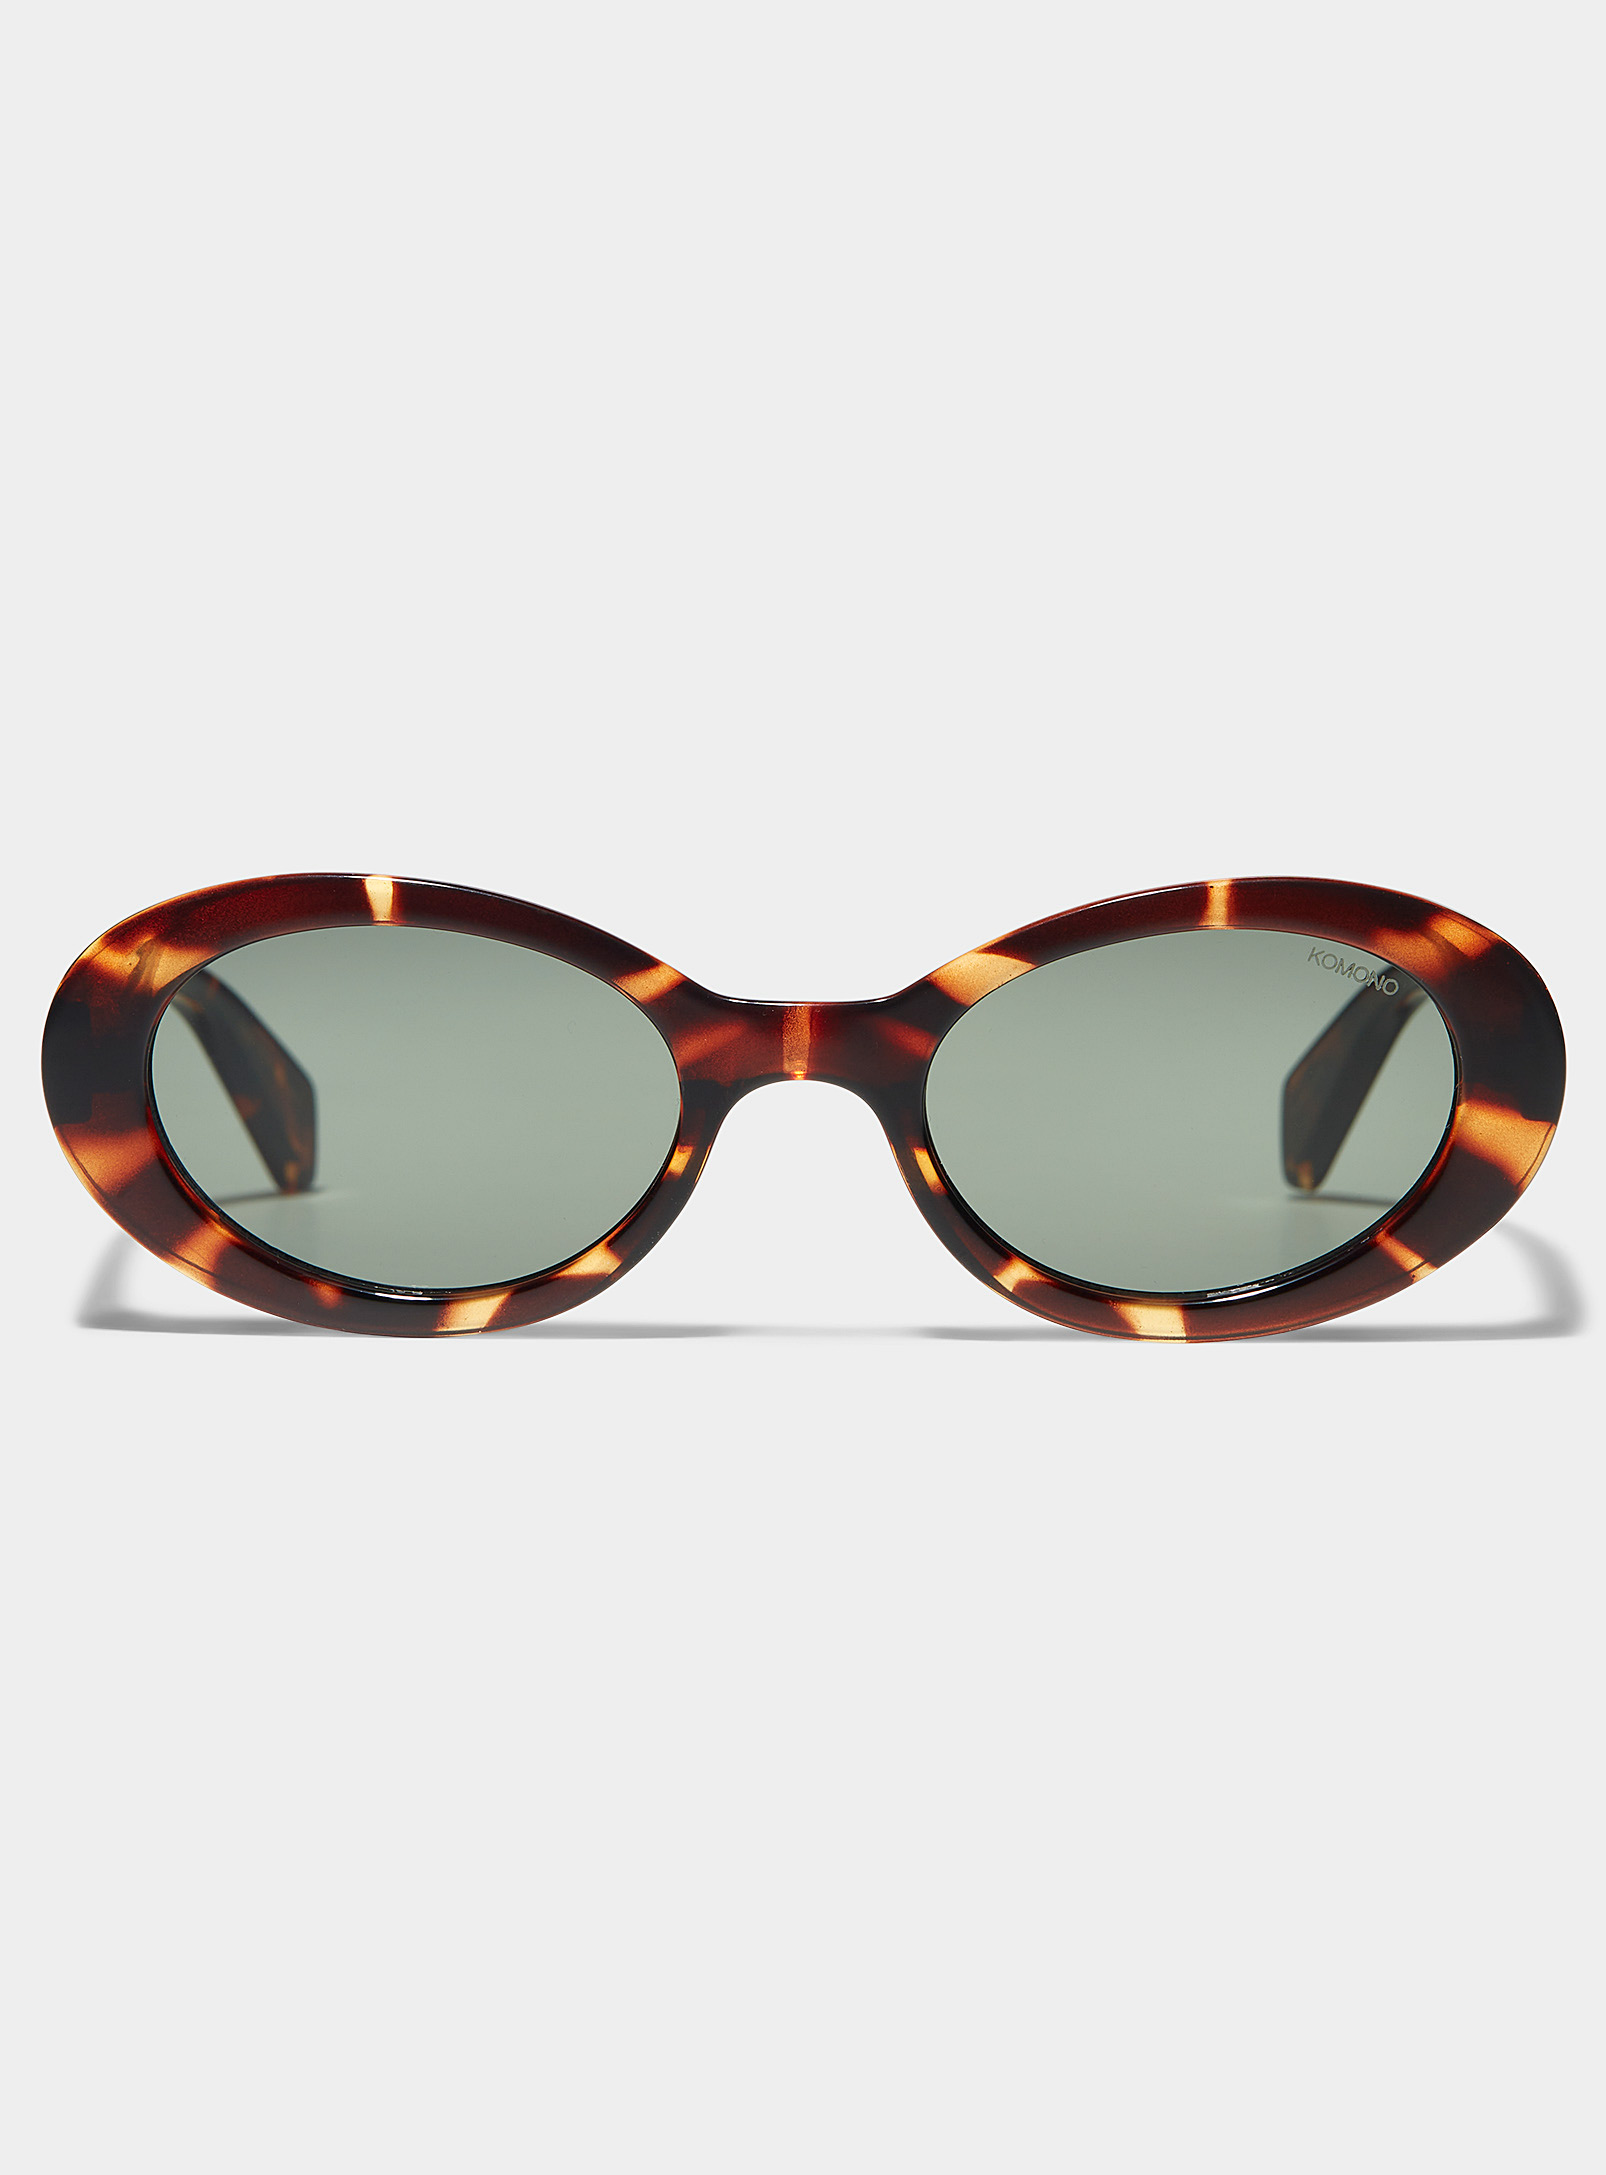 KOMONO - Women's Ana oval sunglasses